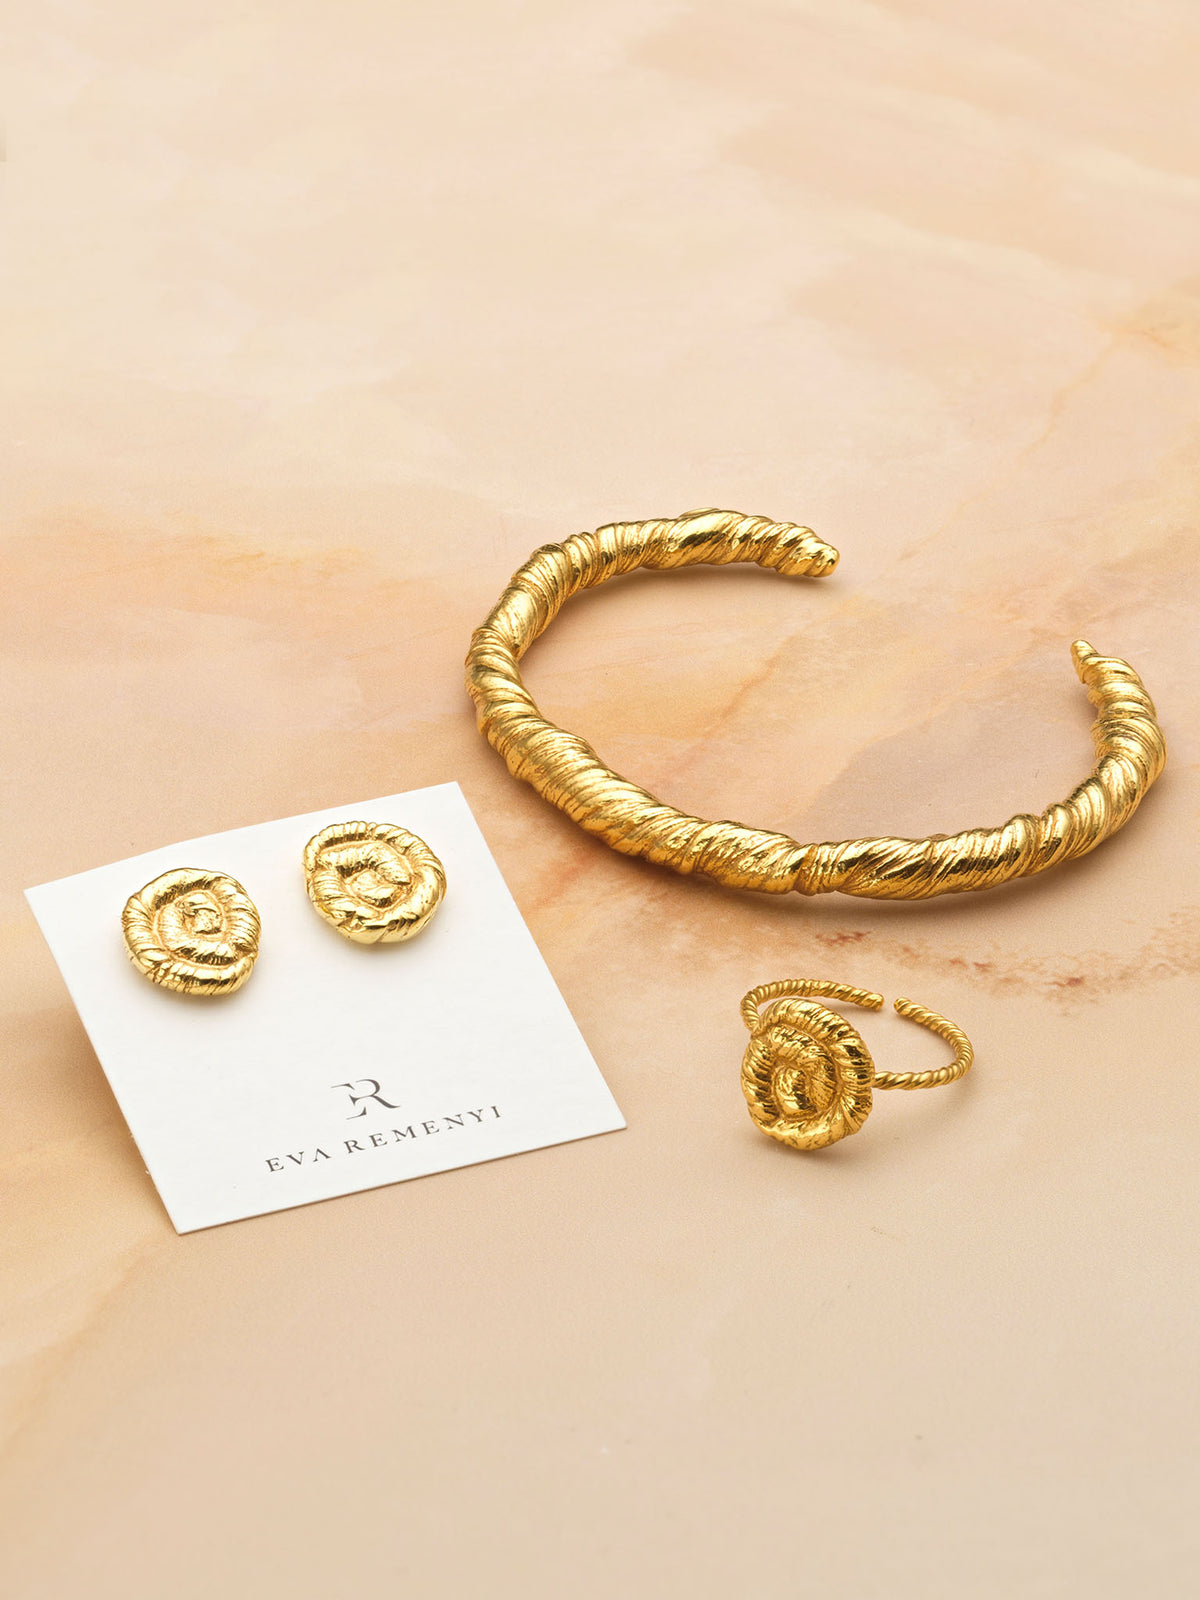 Nautilus Ring Gold